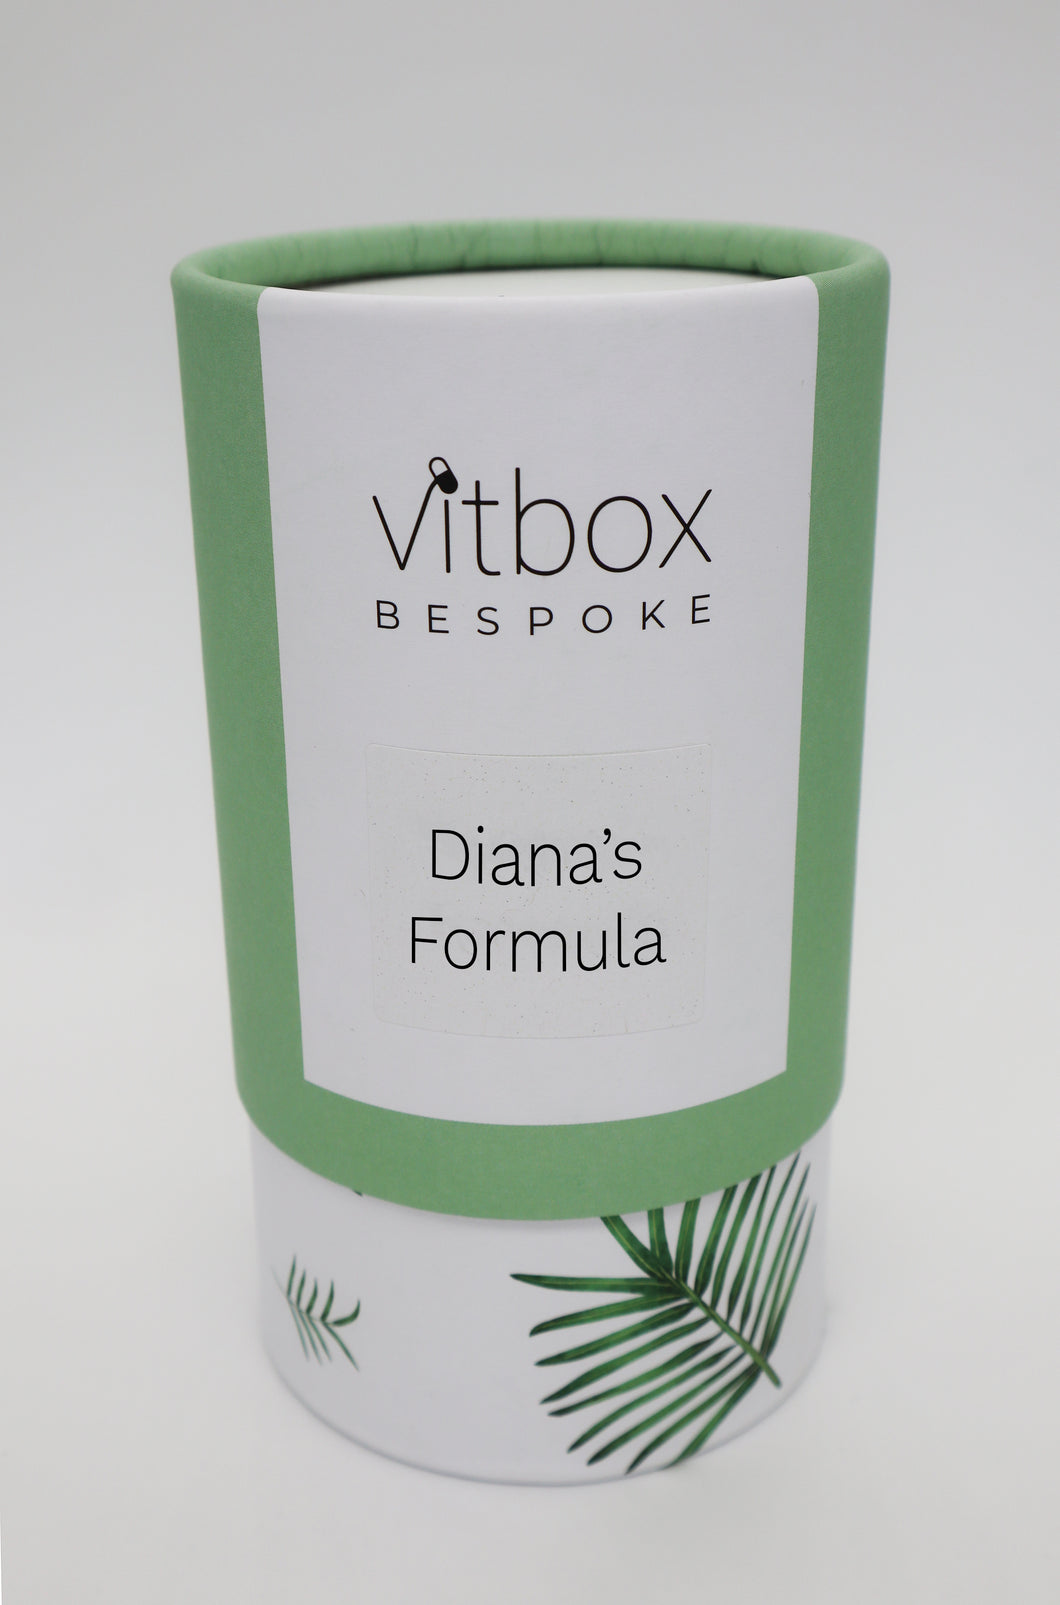 Diana's Vitbox Bespoke